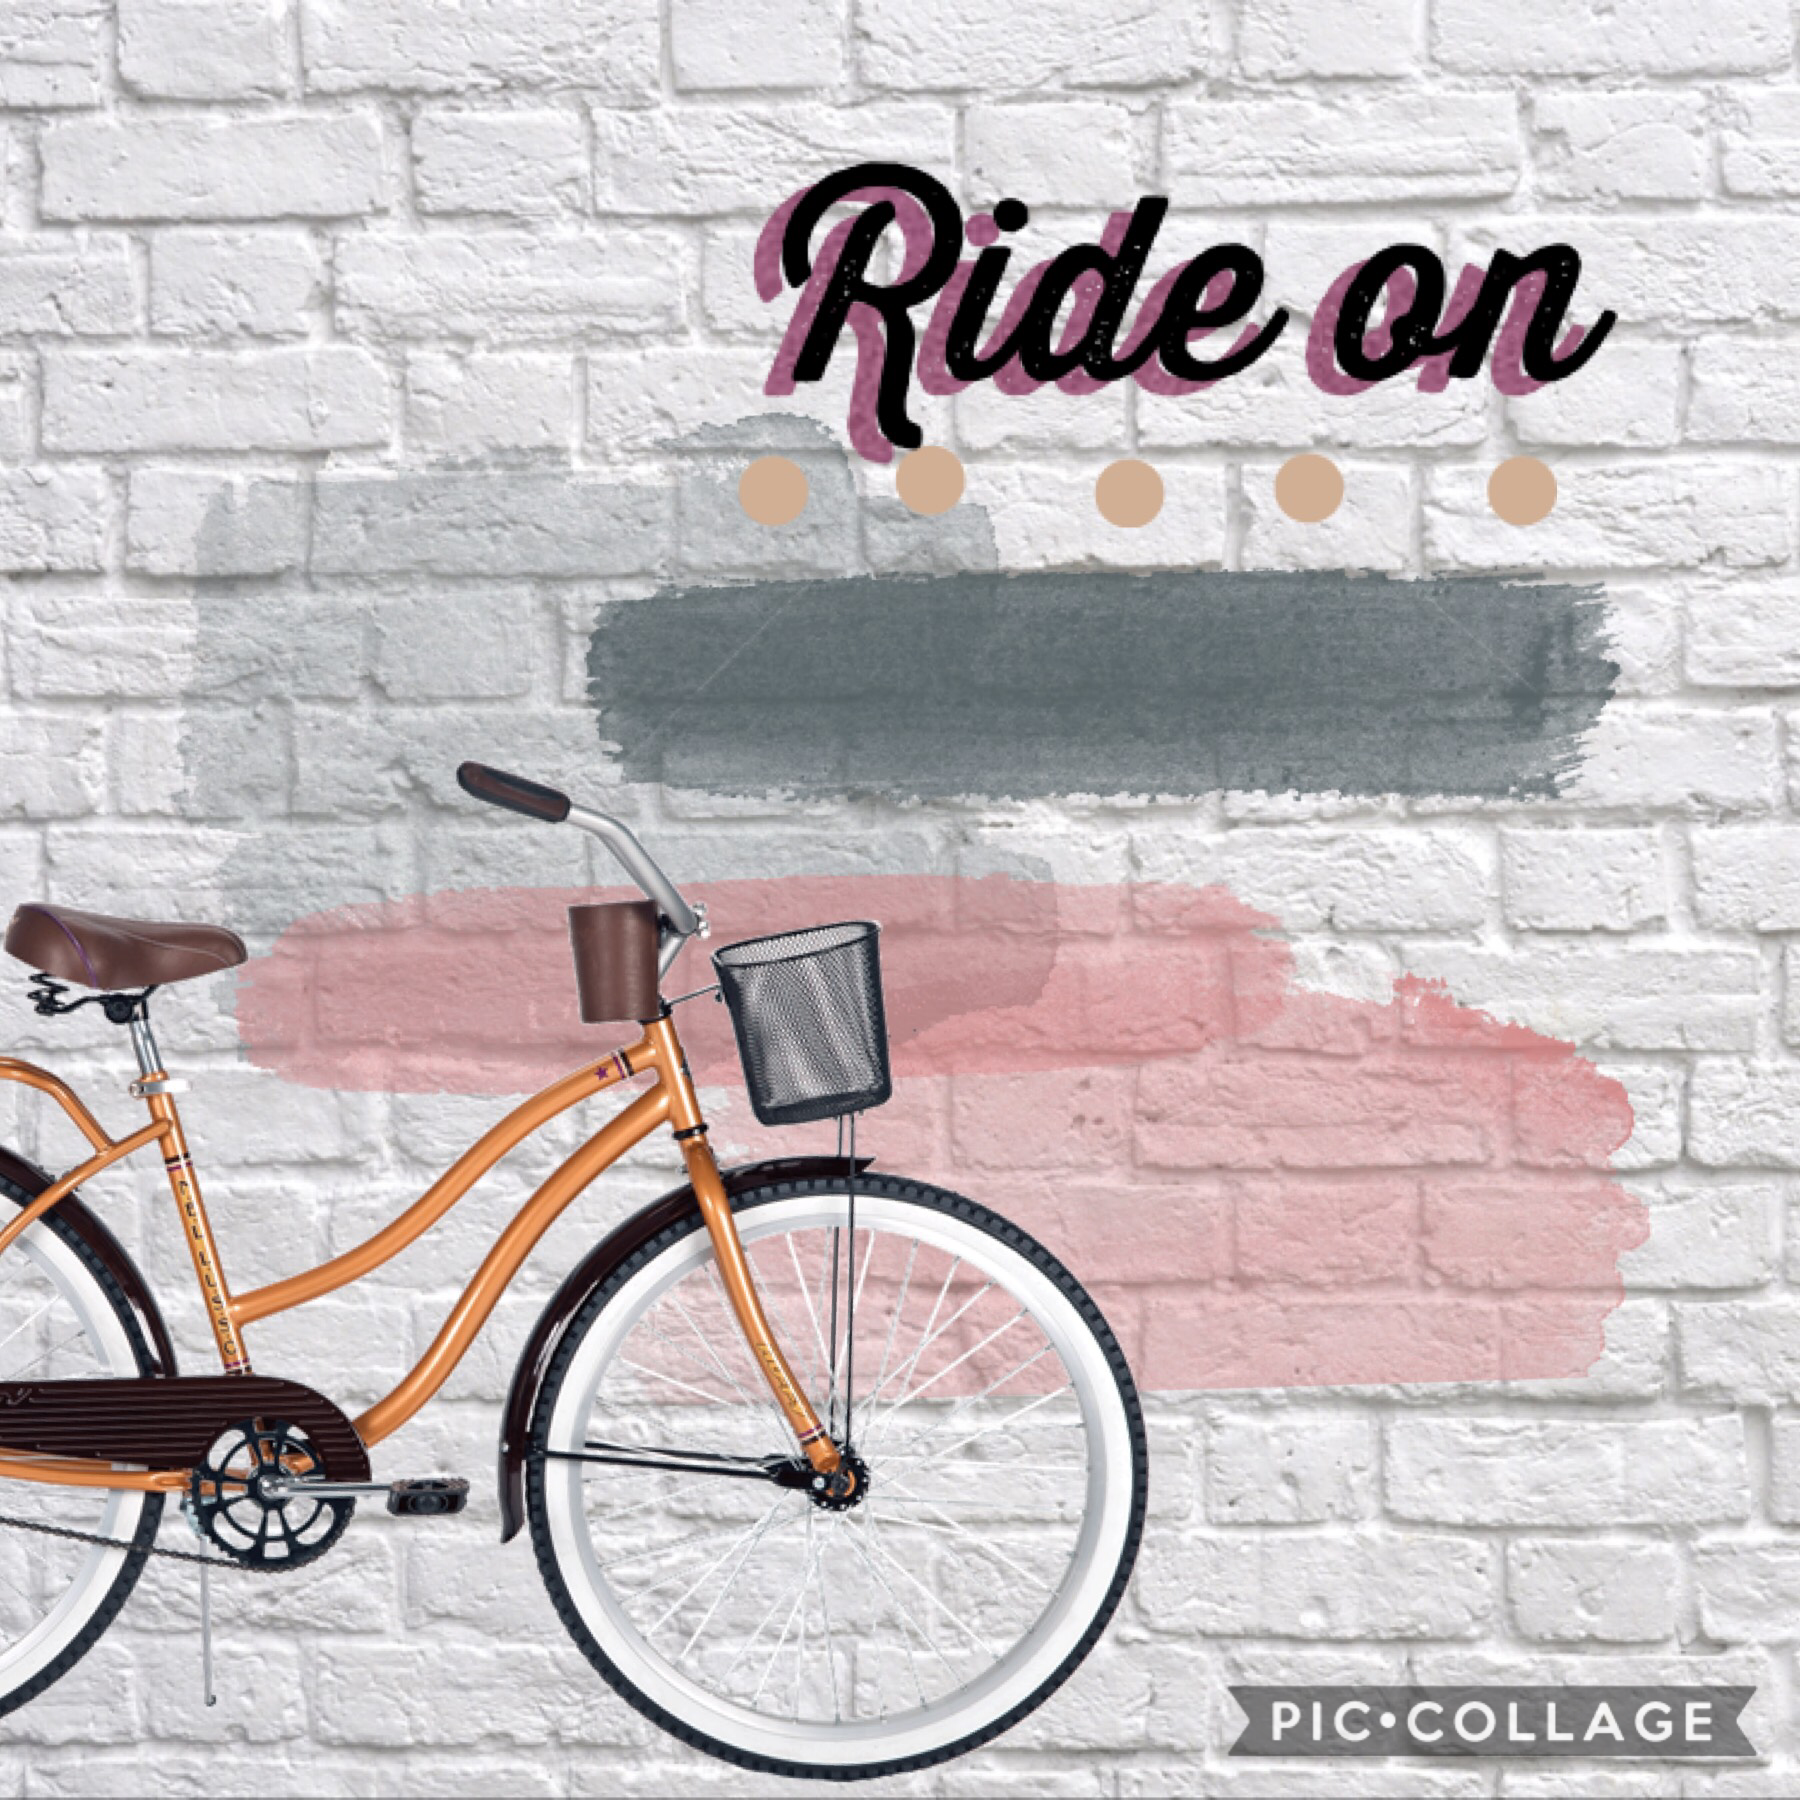 Ride on!!